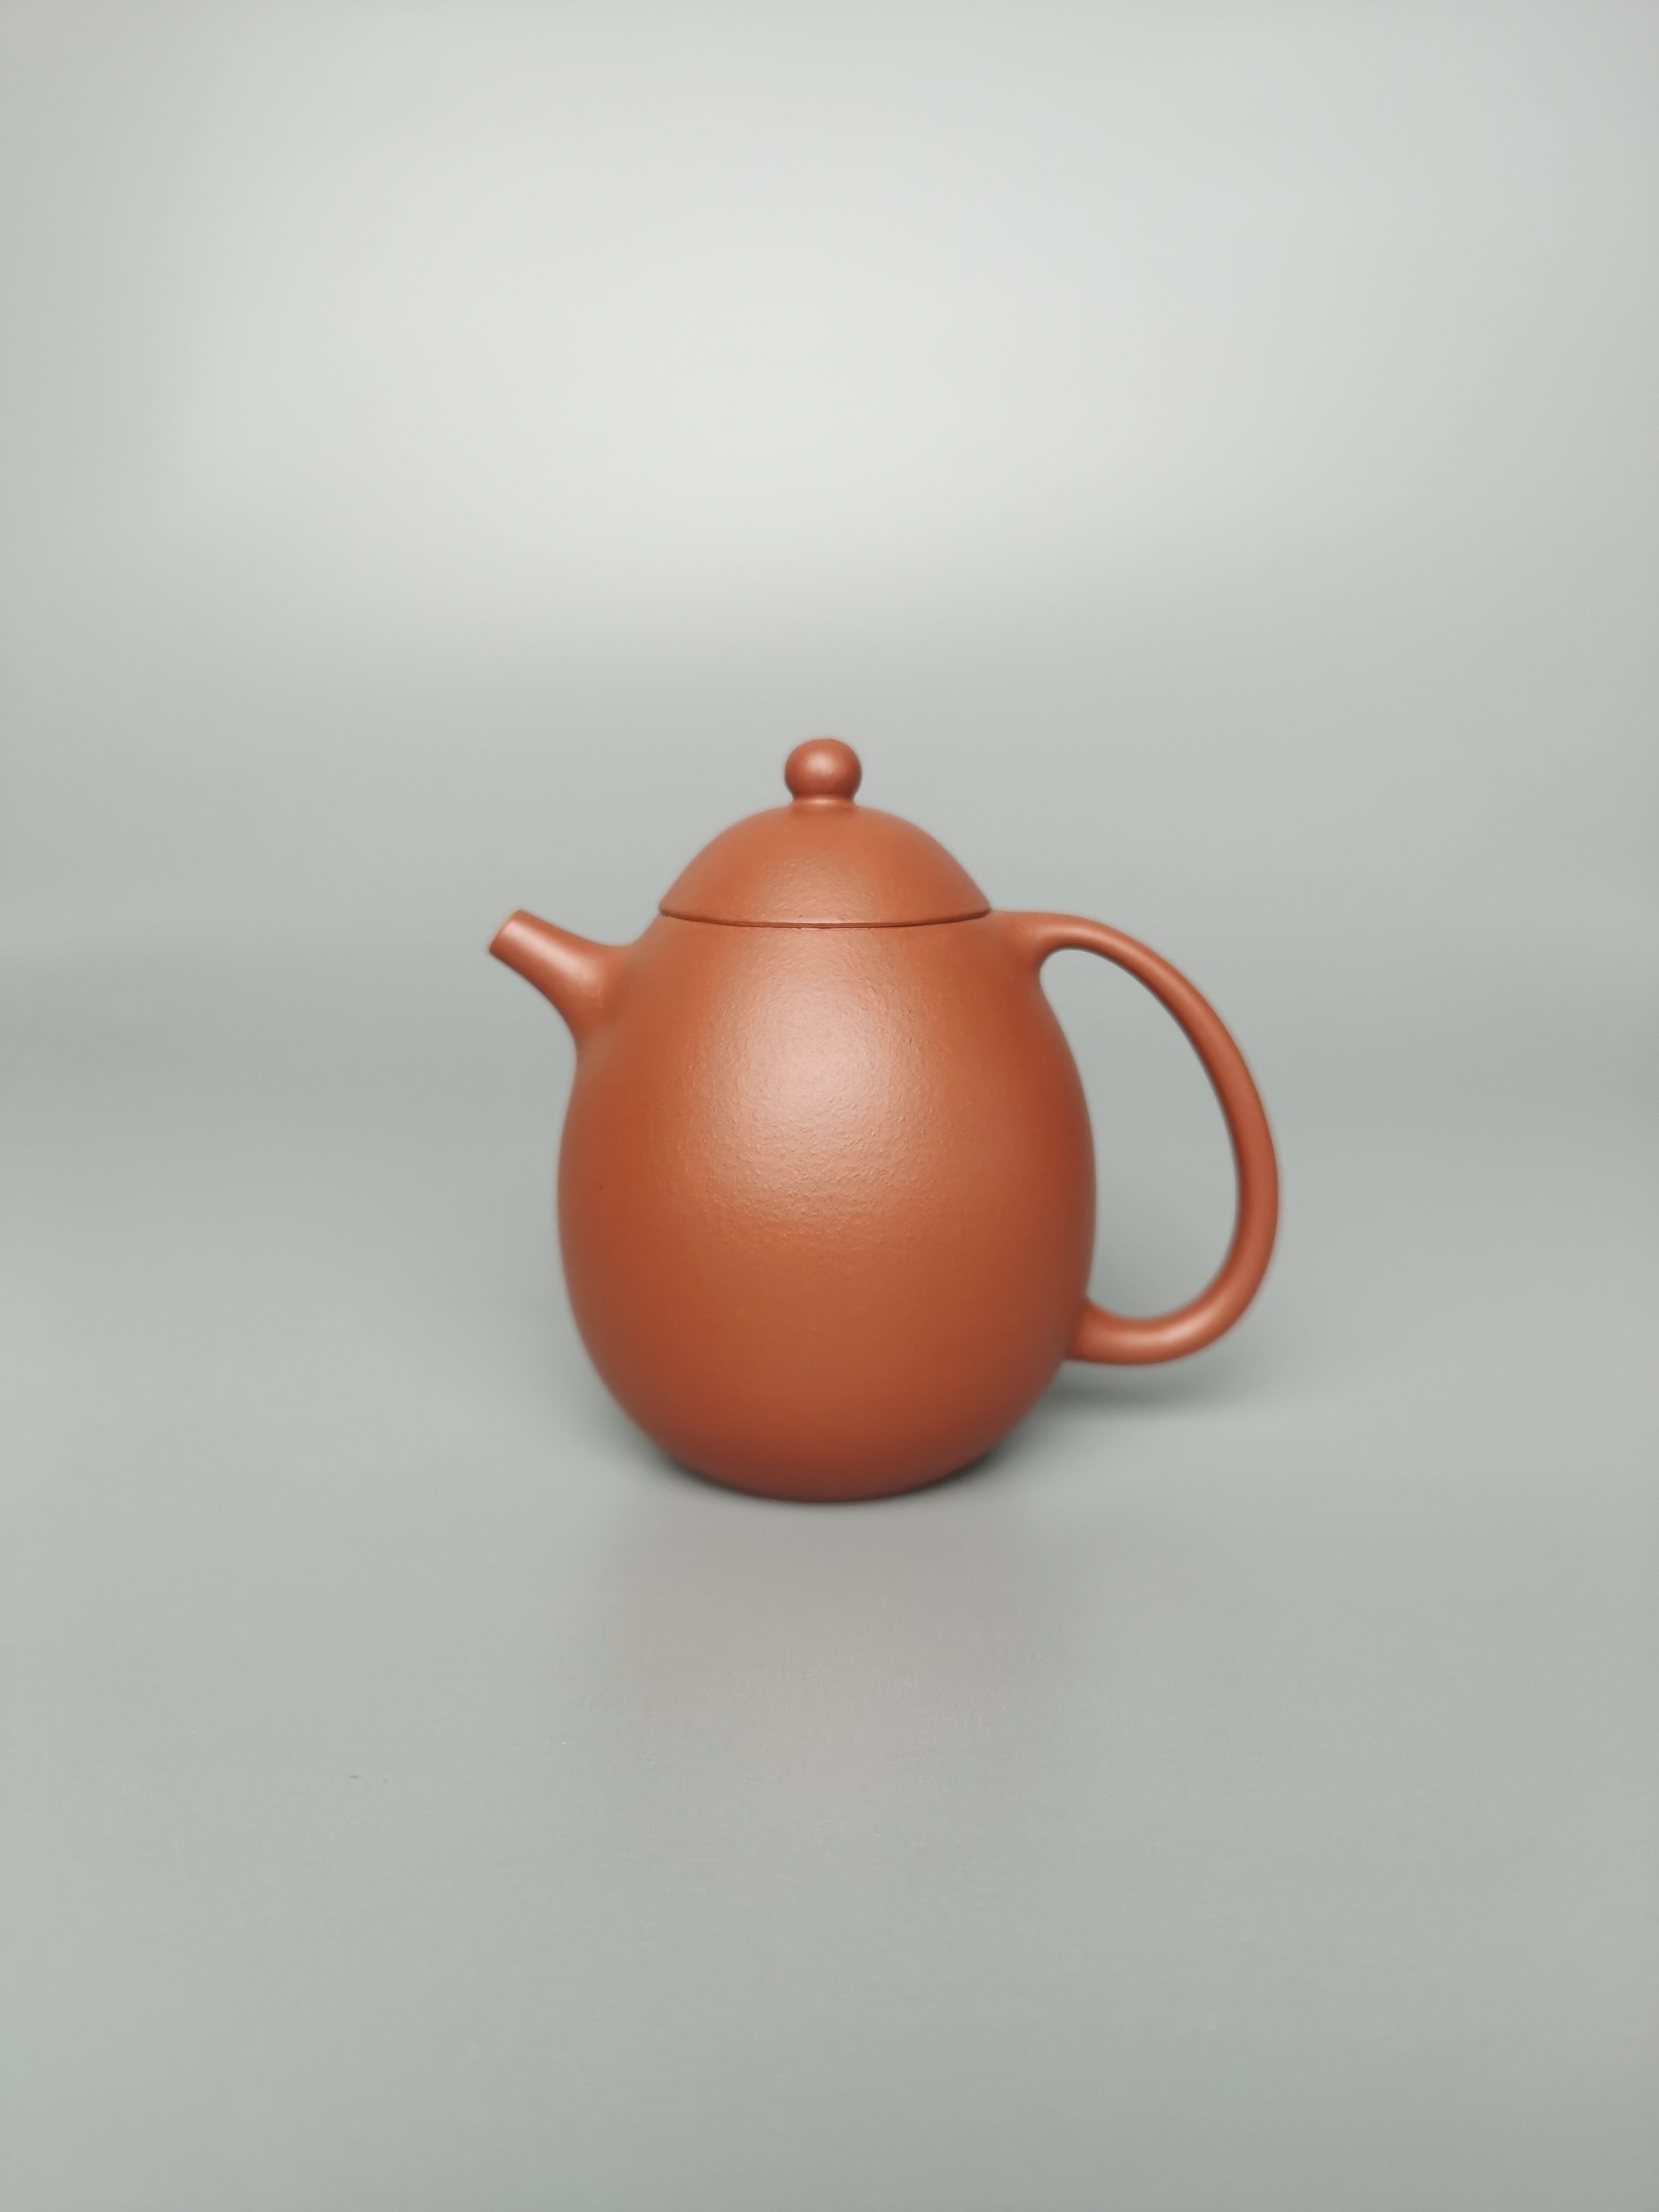 Siyutao teapot dragon egg handcraft 130ml yixing teapot